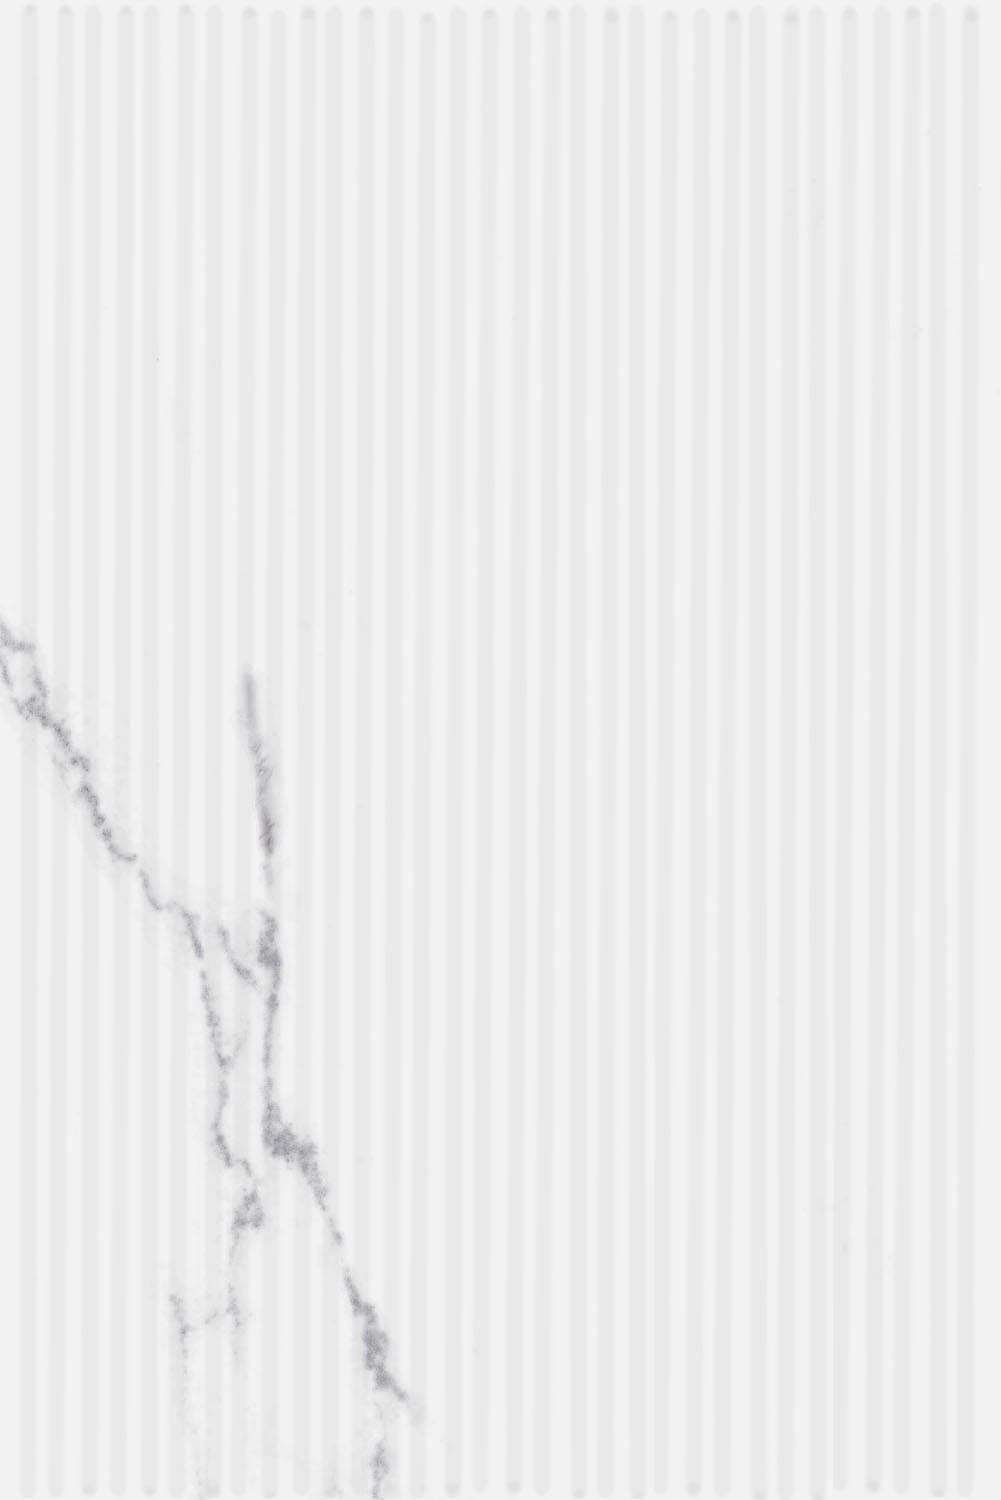 8377 Настенная Мираколи Белый глянцевый структура 20x30x0.86 - фото 8